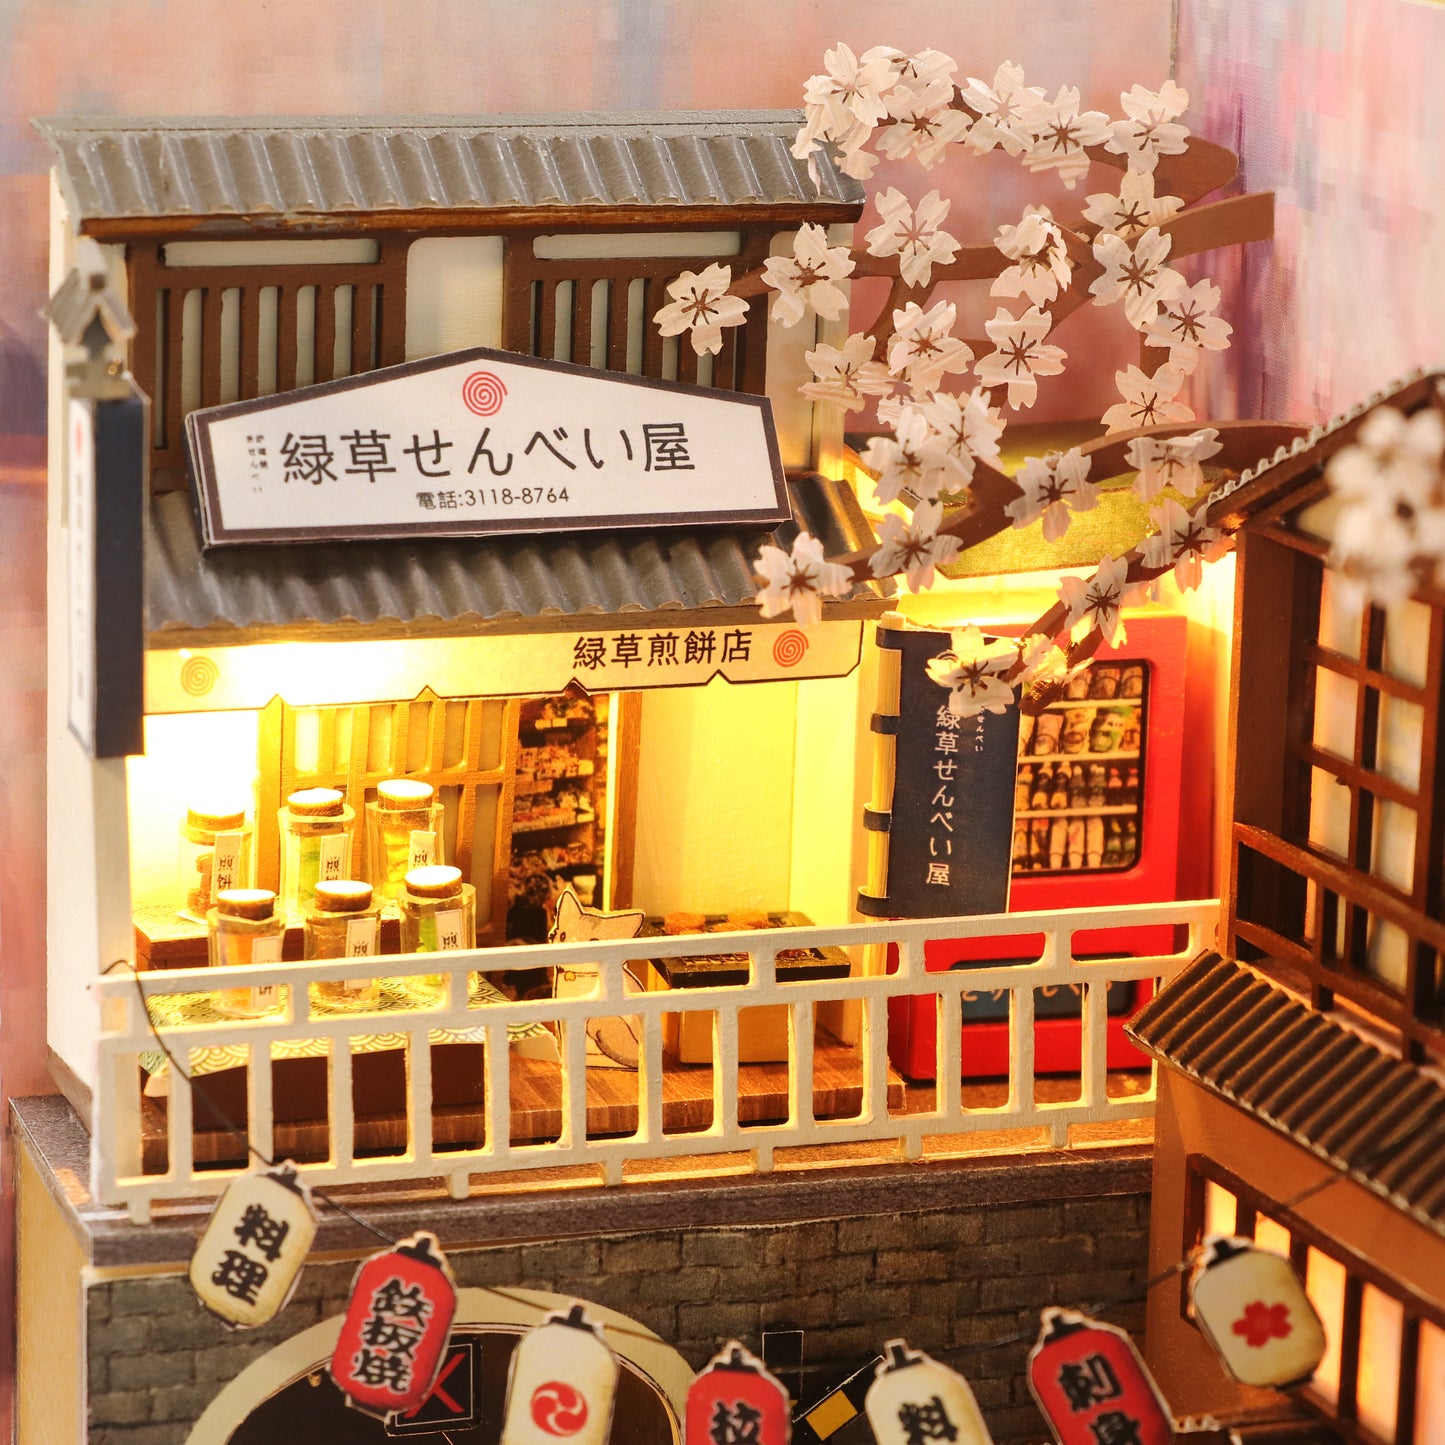 Hongda M2211 ’Sakura Holiday‘ w/LED Lights and Glues, Wooden Miniature Dollhouse Furniture Kits